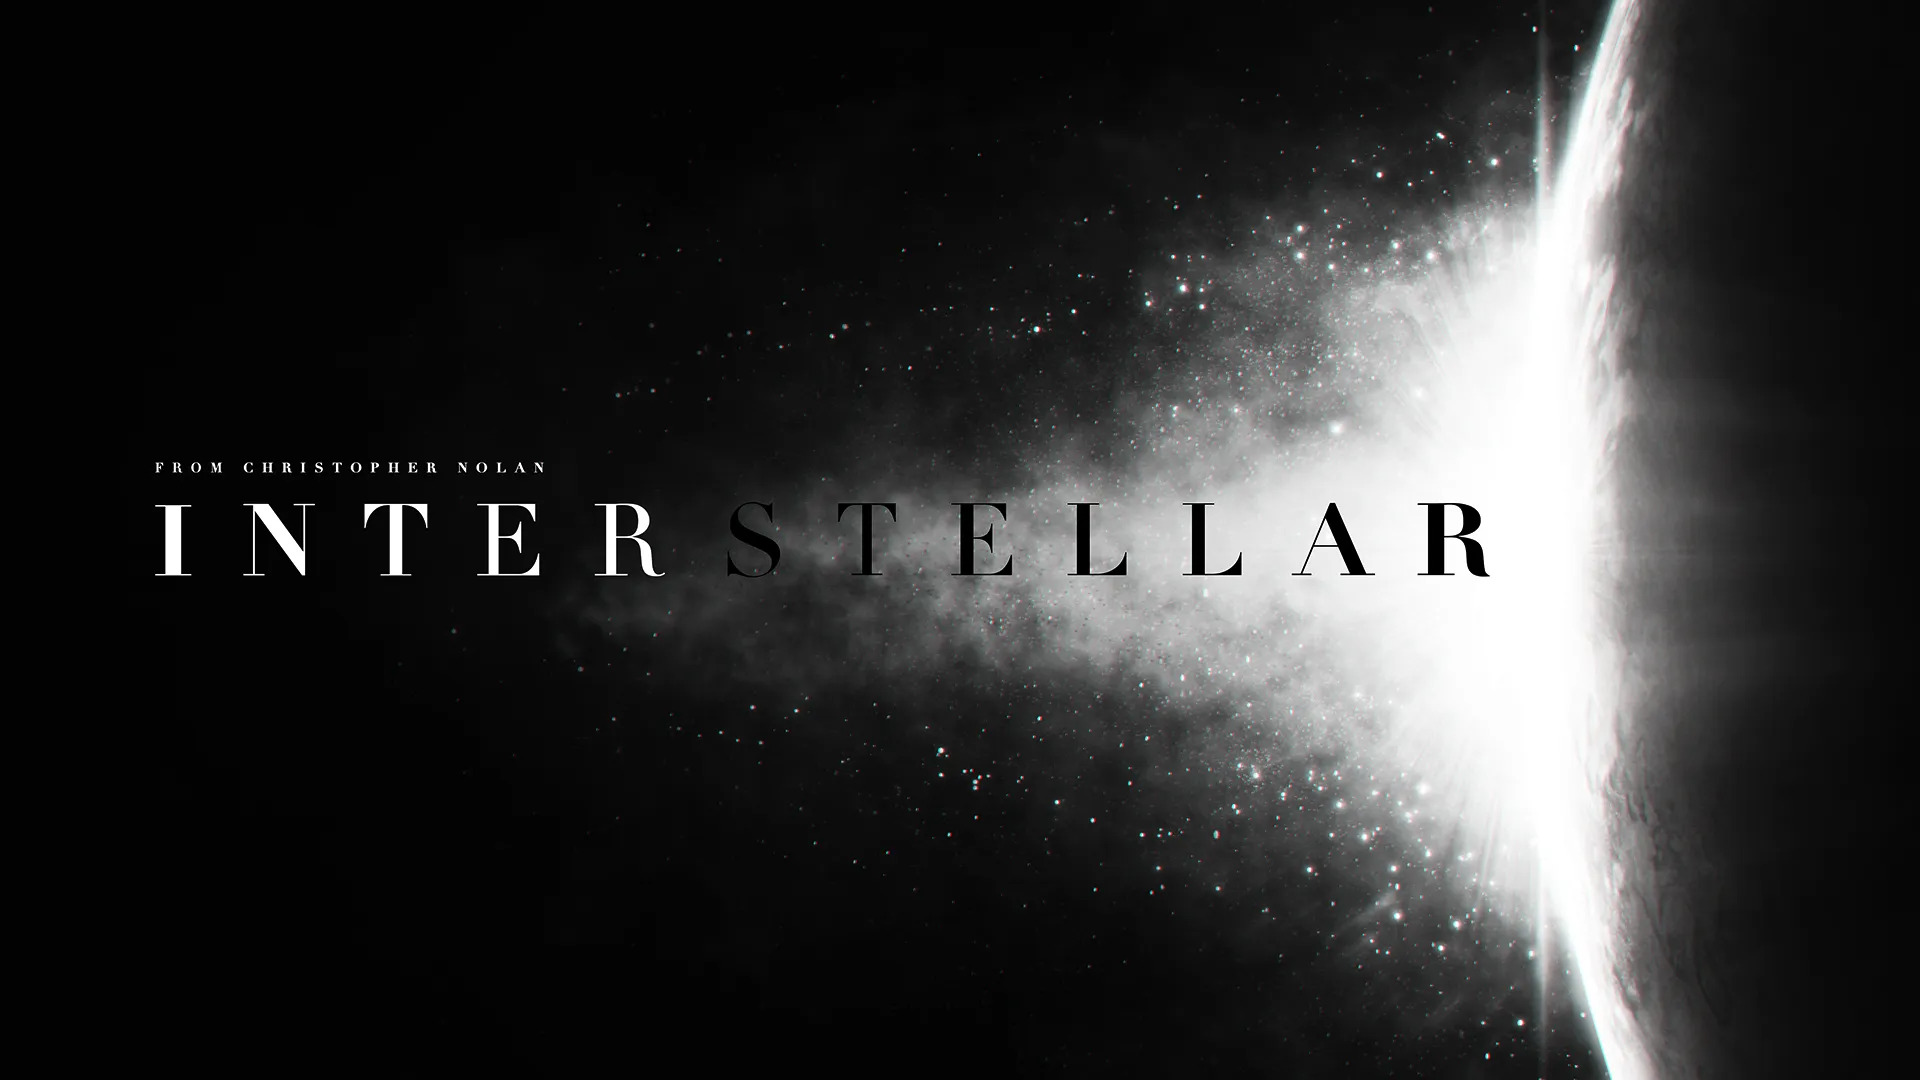 33-facts-about-the-movie-interstellar